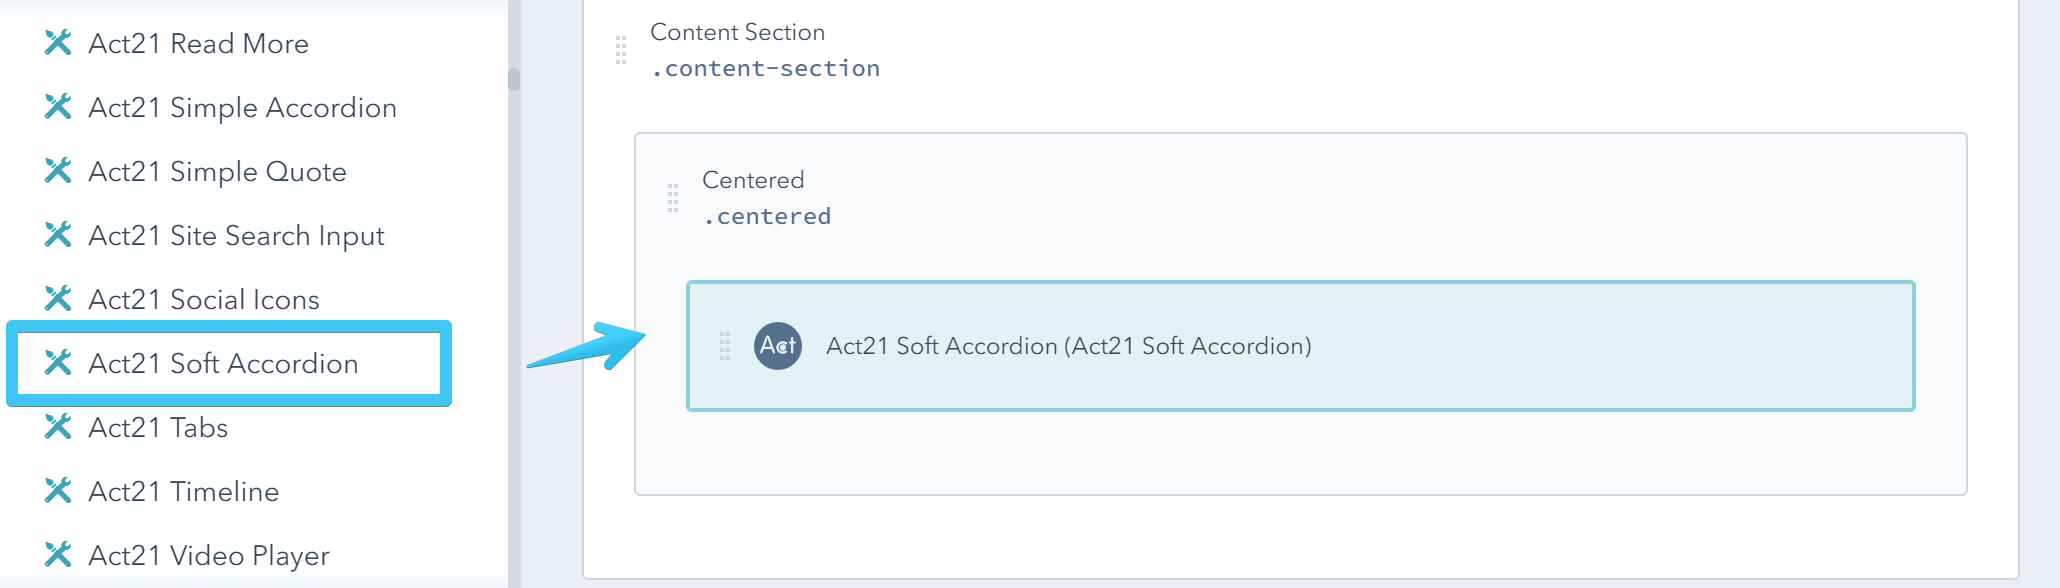 Act21 Soft Accordion Module